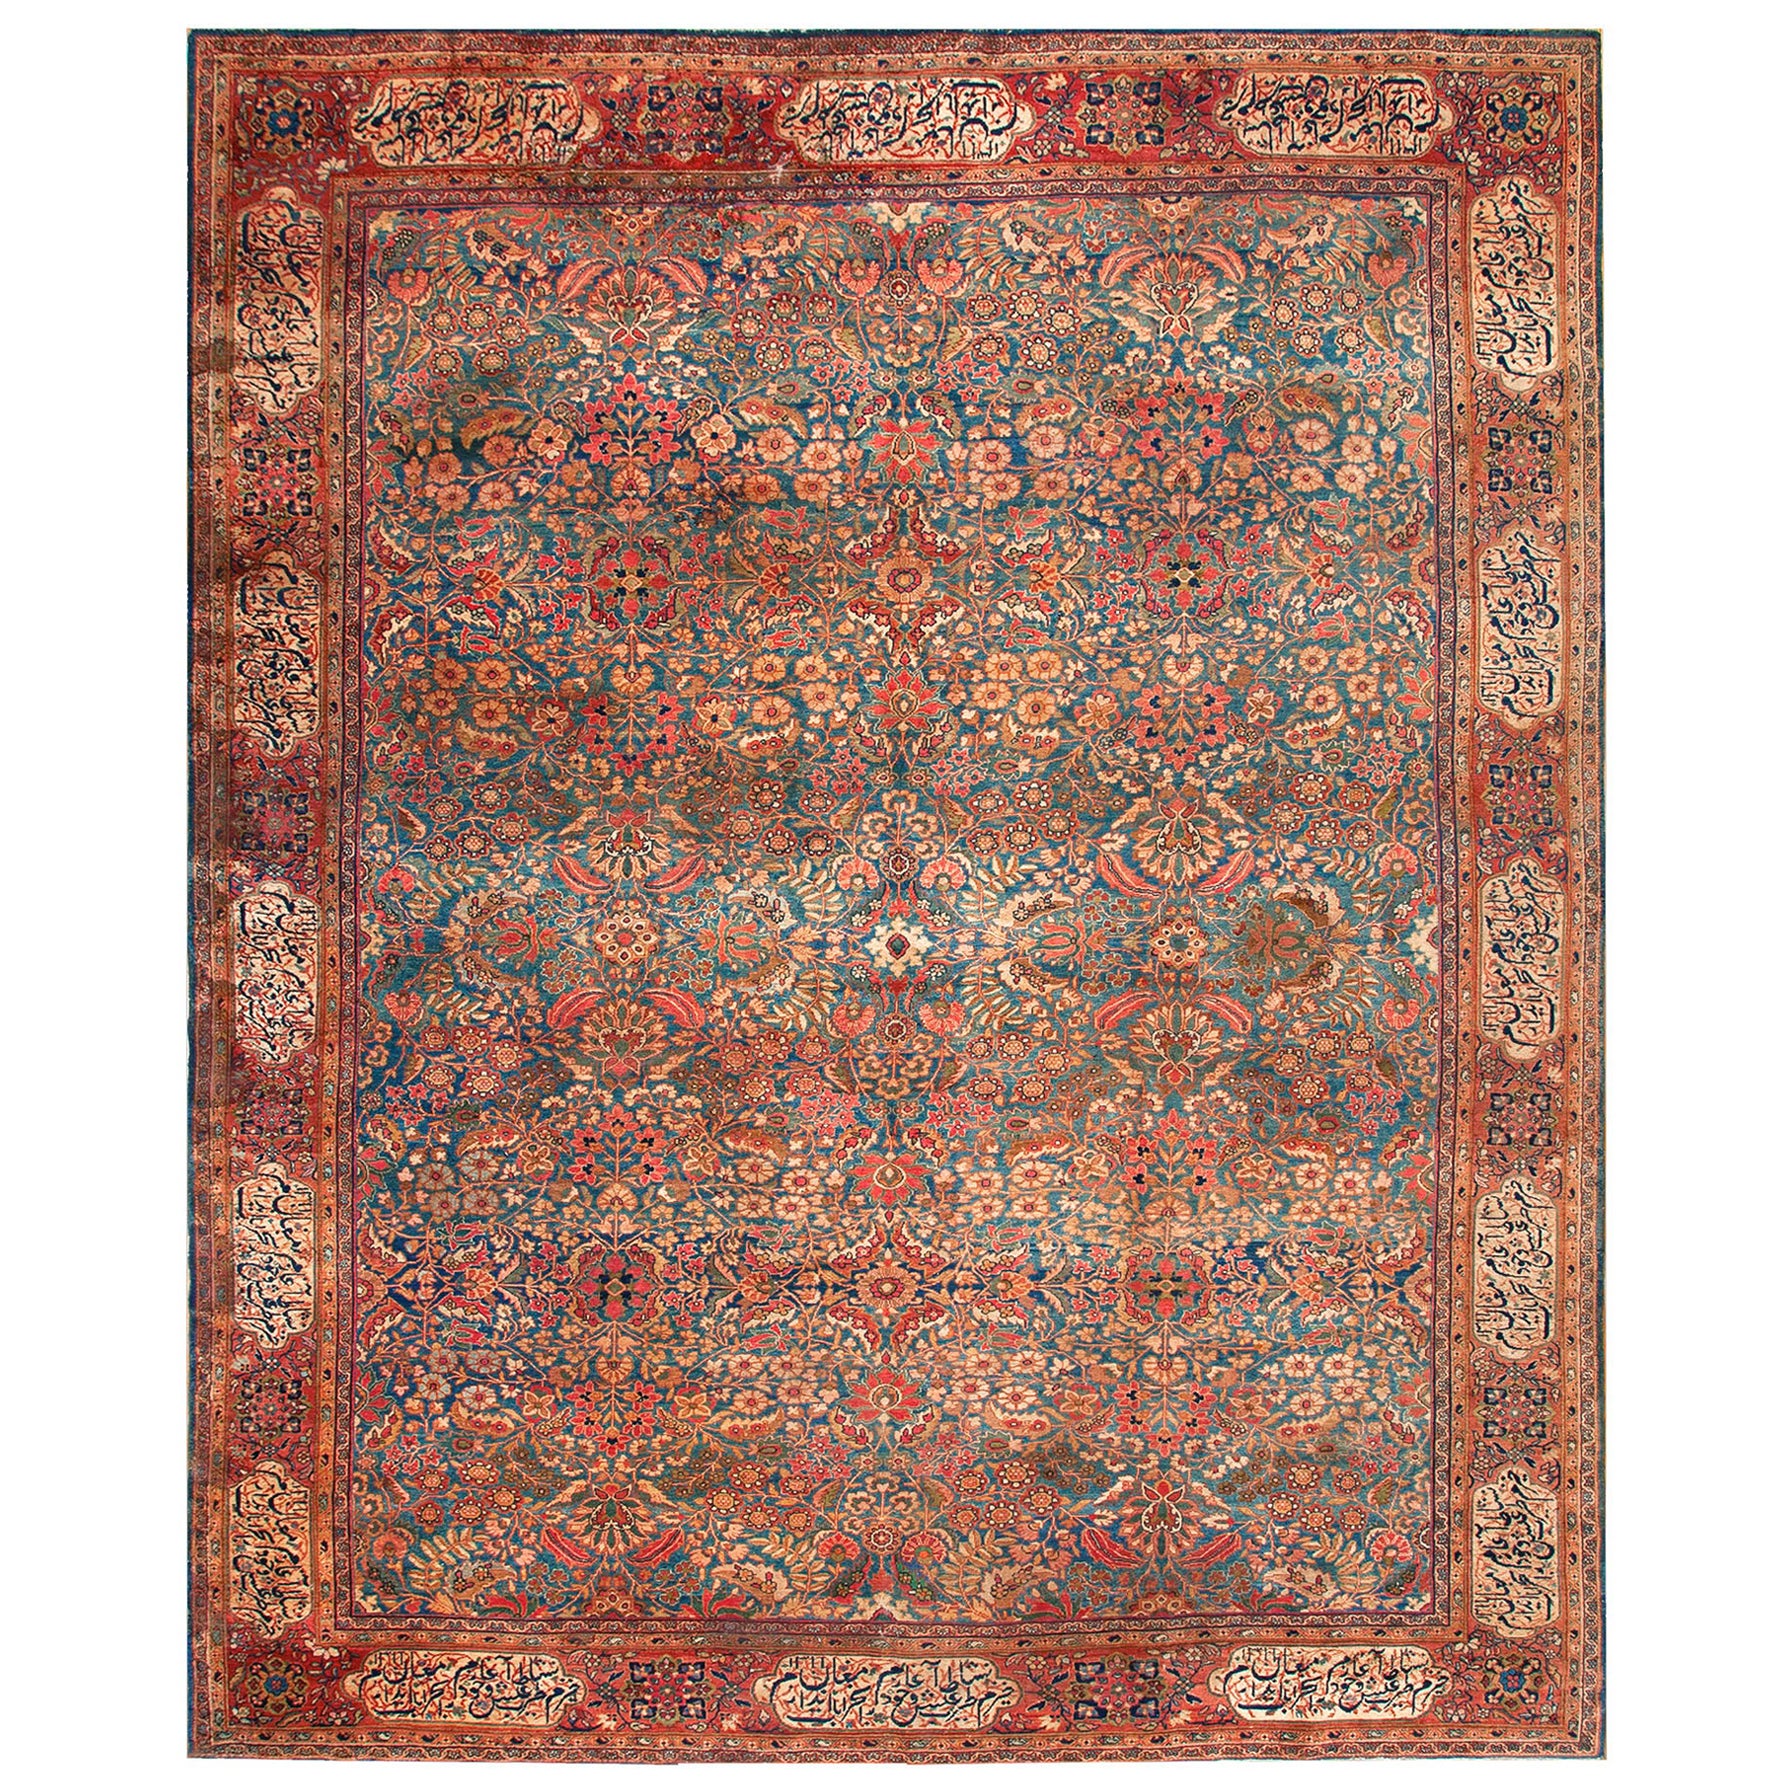 19th Century Persian Sarouk Farahan Carpet ( 10'6" x 13'6" - 320 x 412 ) For Sale